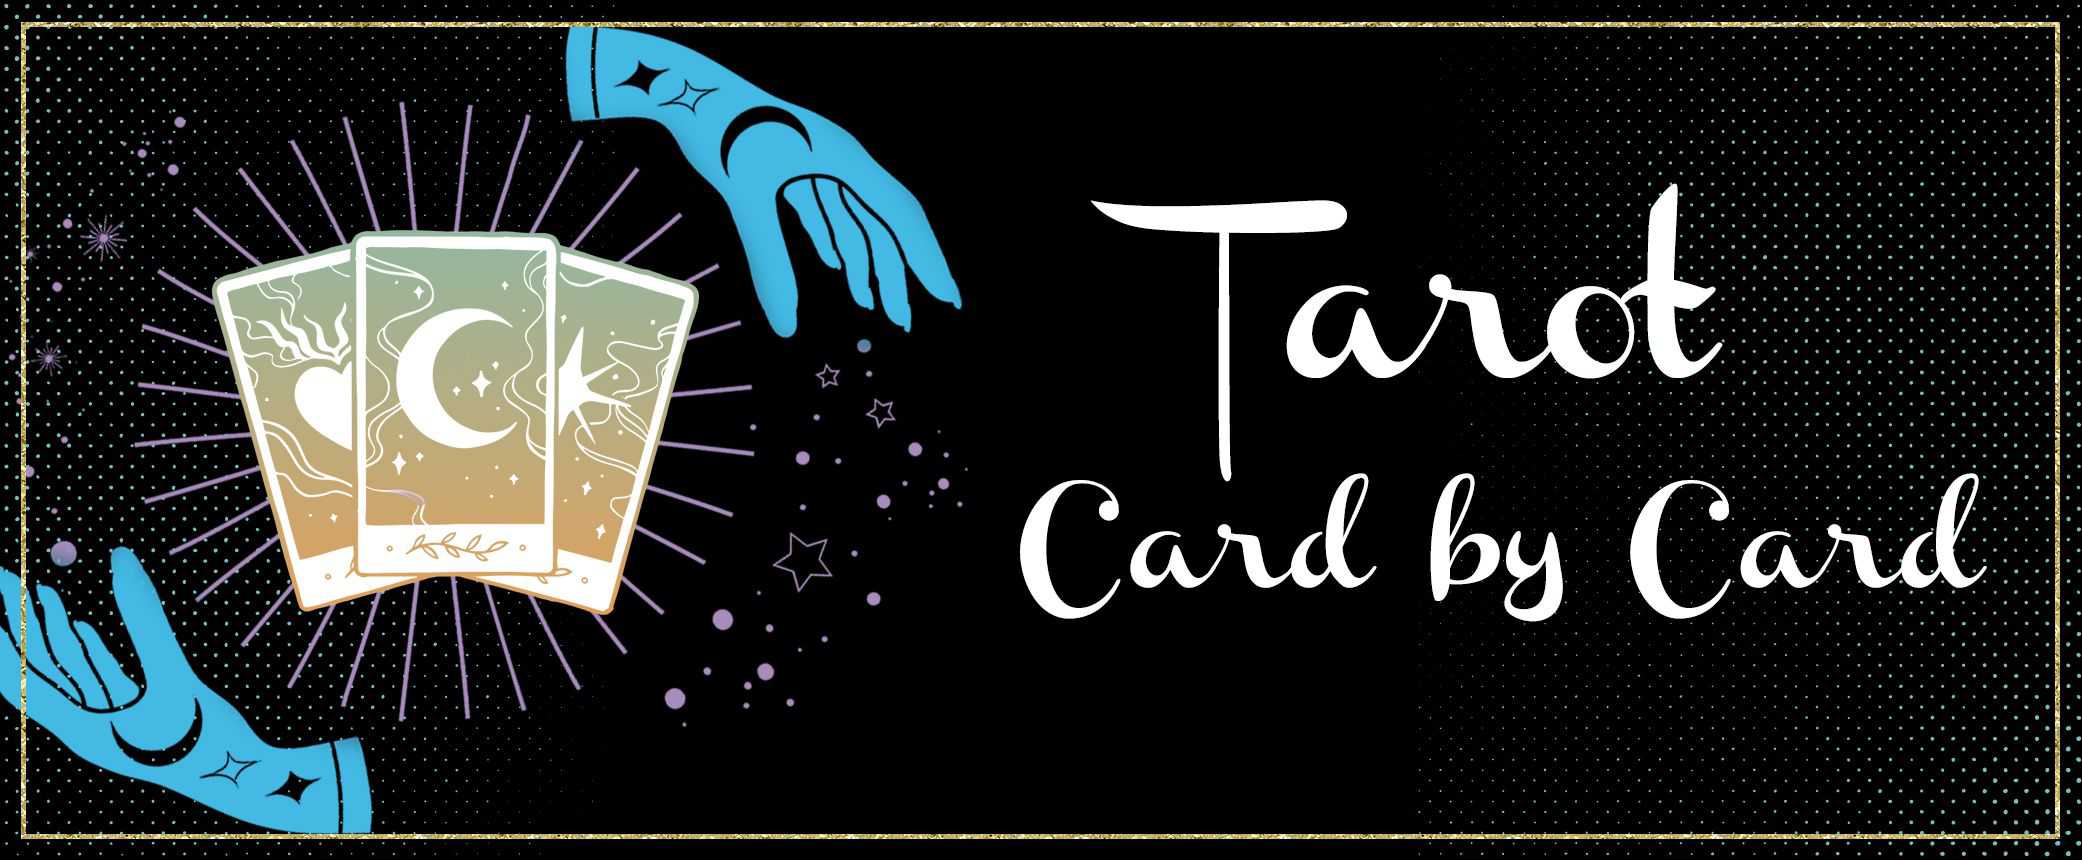 Tarot Card by Card - Tarot Card Meanings - The Tarot Lady 